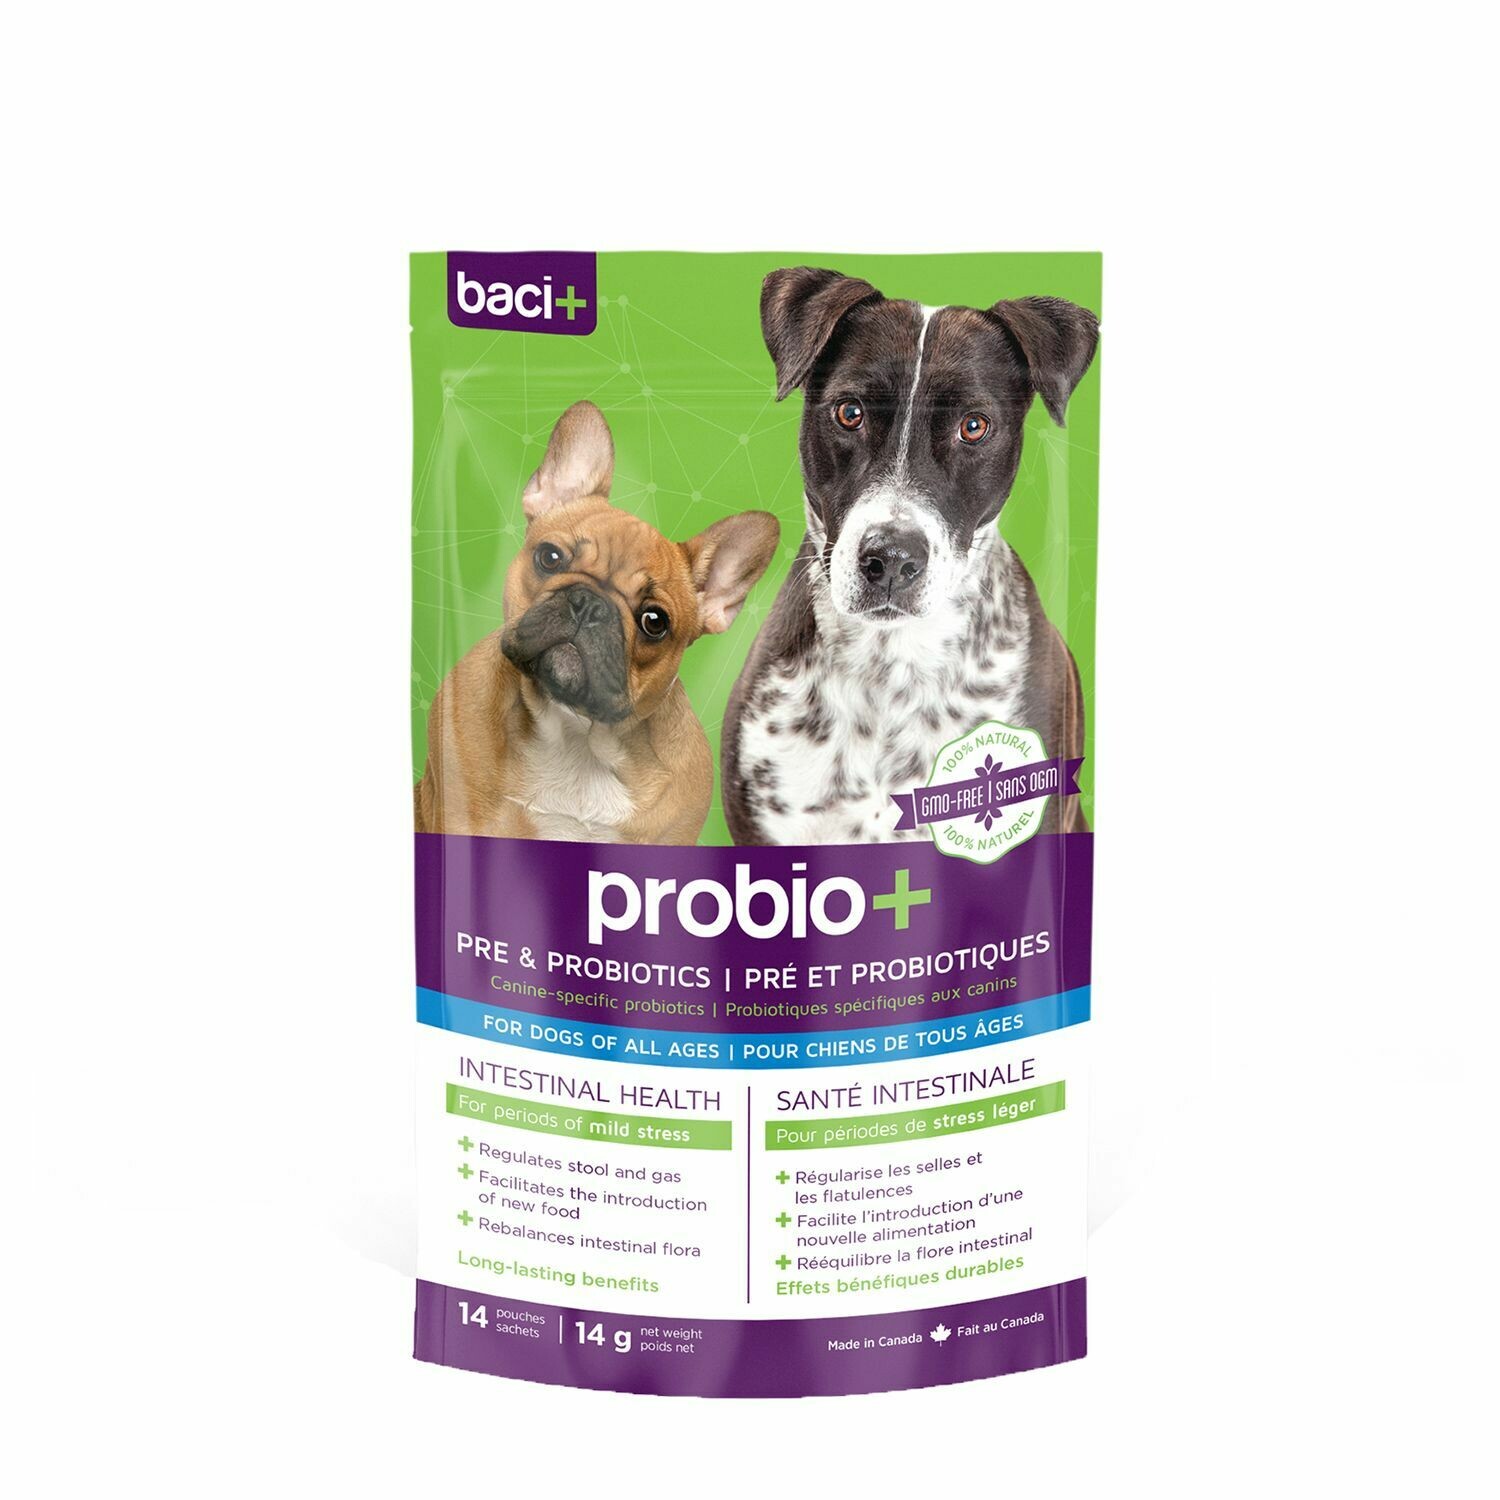 baci+ Pre & probiotics for dogs 42g